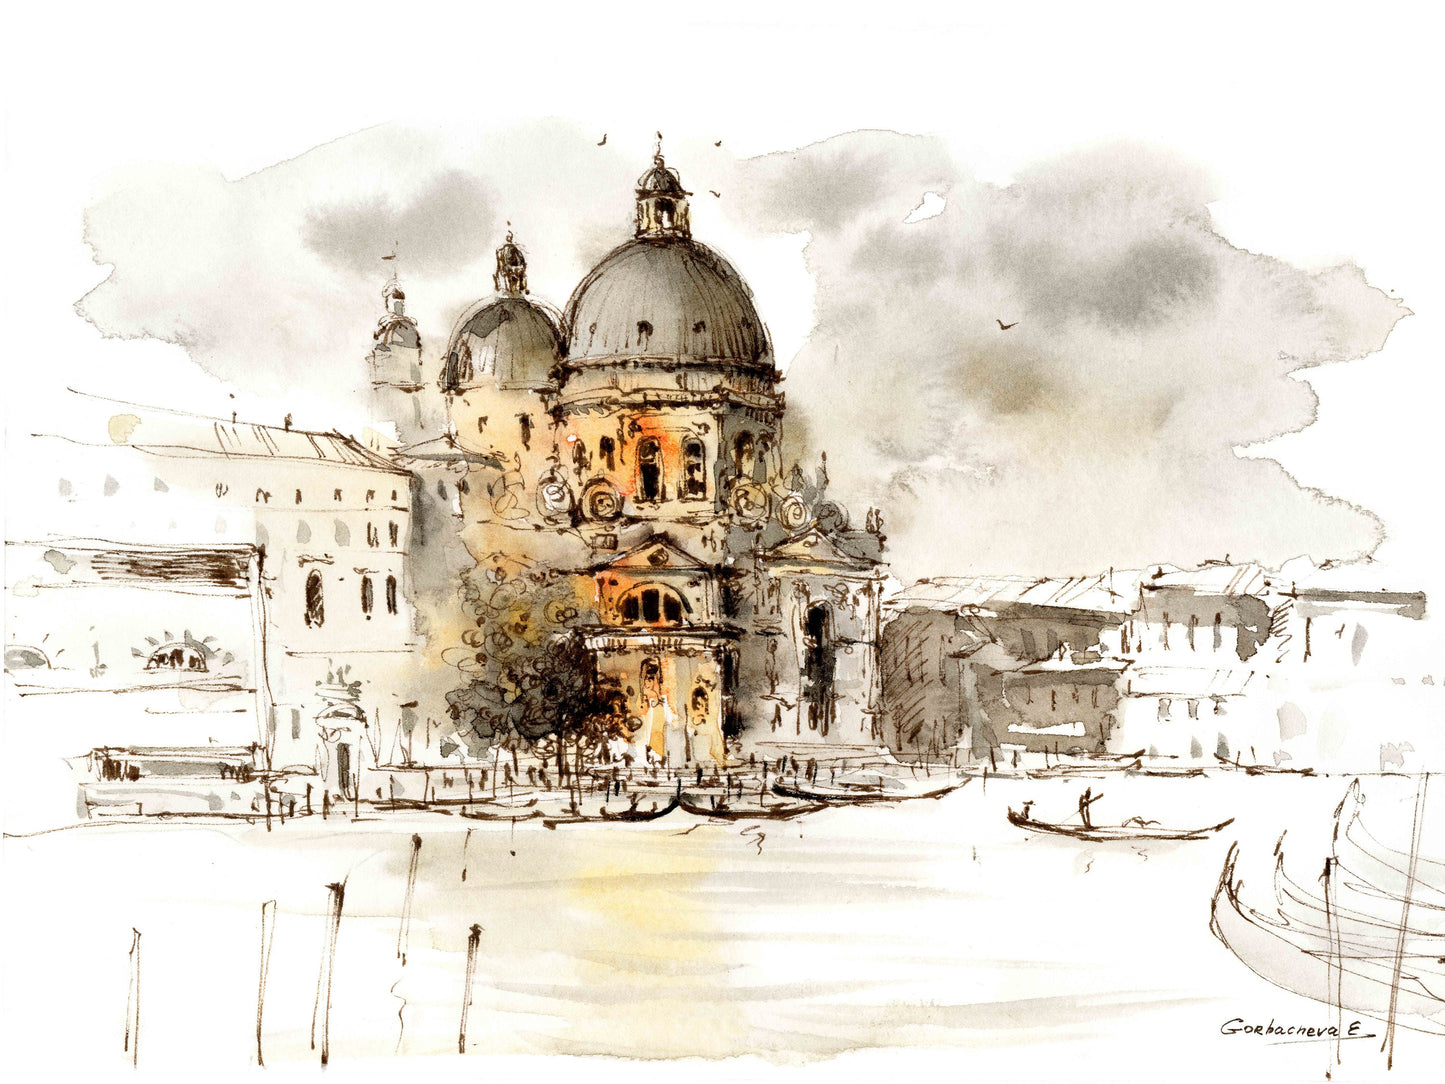 Venice Wall Art, Grand Canal Print, Europe Architecture, Santa Maria Della Salute, Watercolor Sketch, Travel Painting